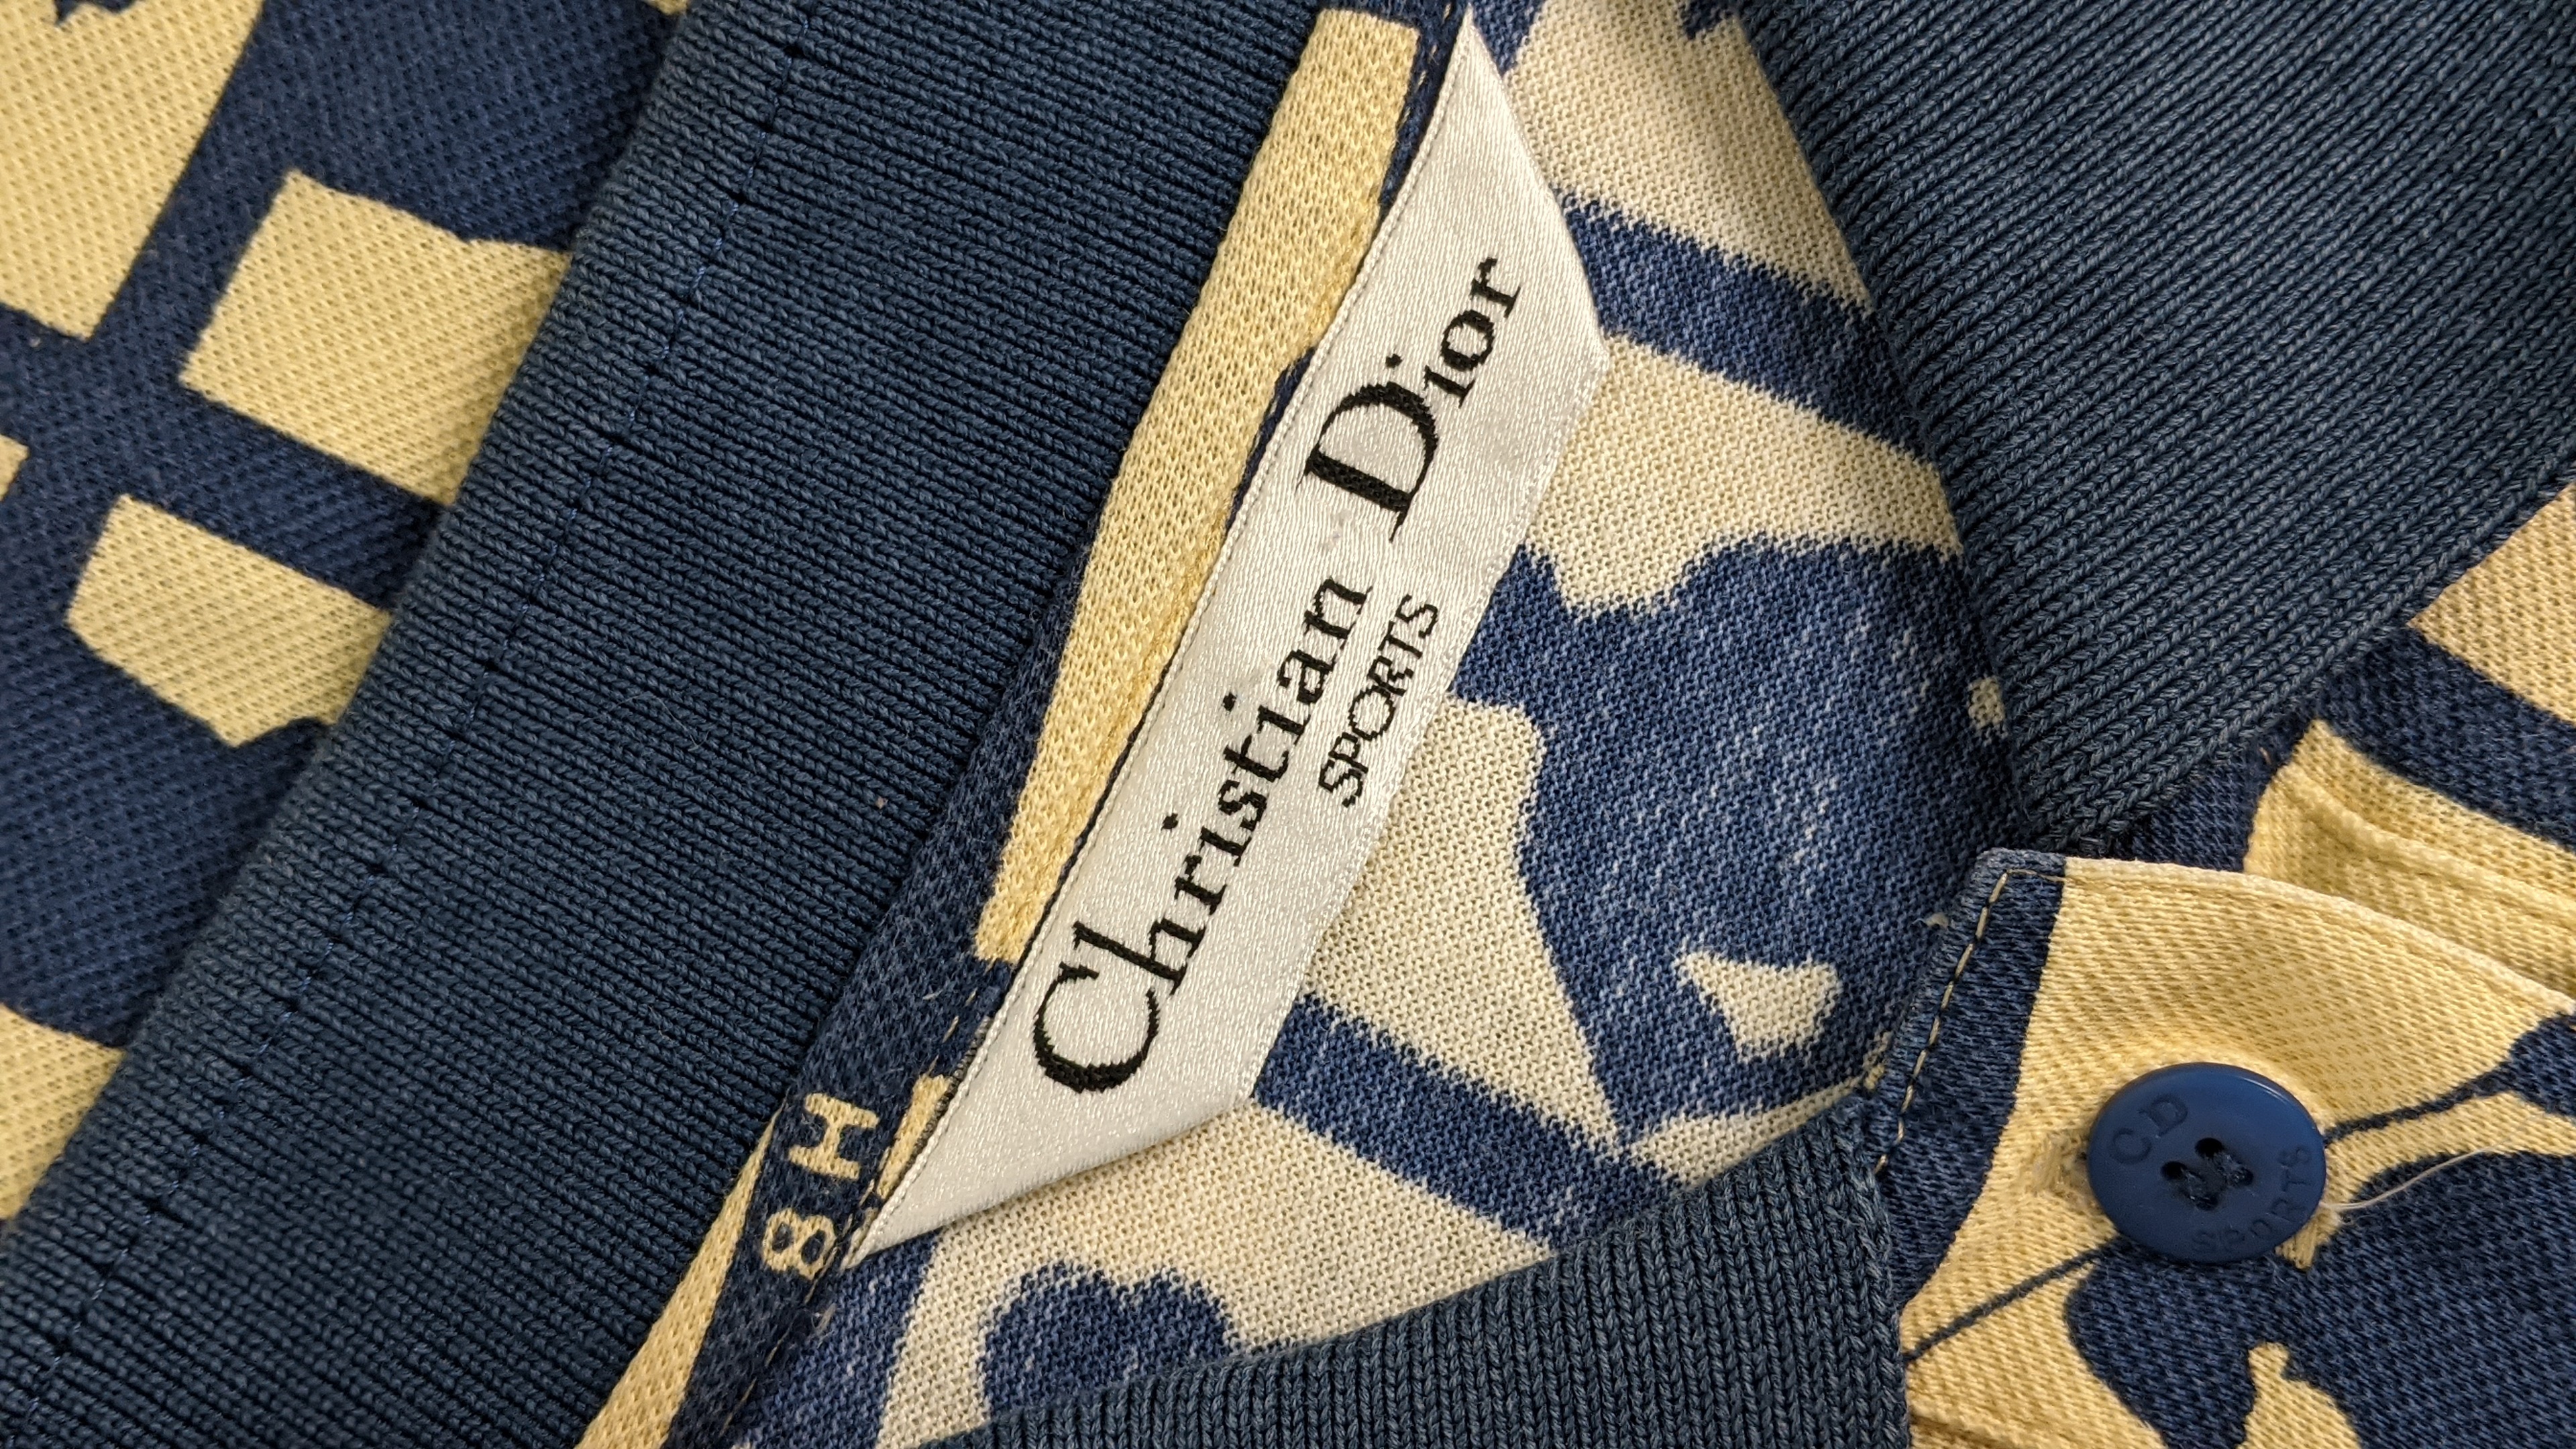 Christian Dior Monsieur - Christian Dior Sports Golf Pattern Polo shirt - 4